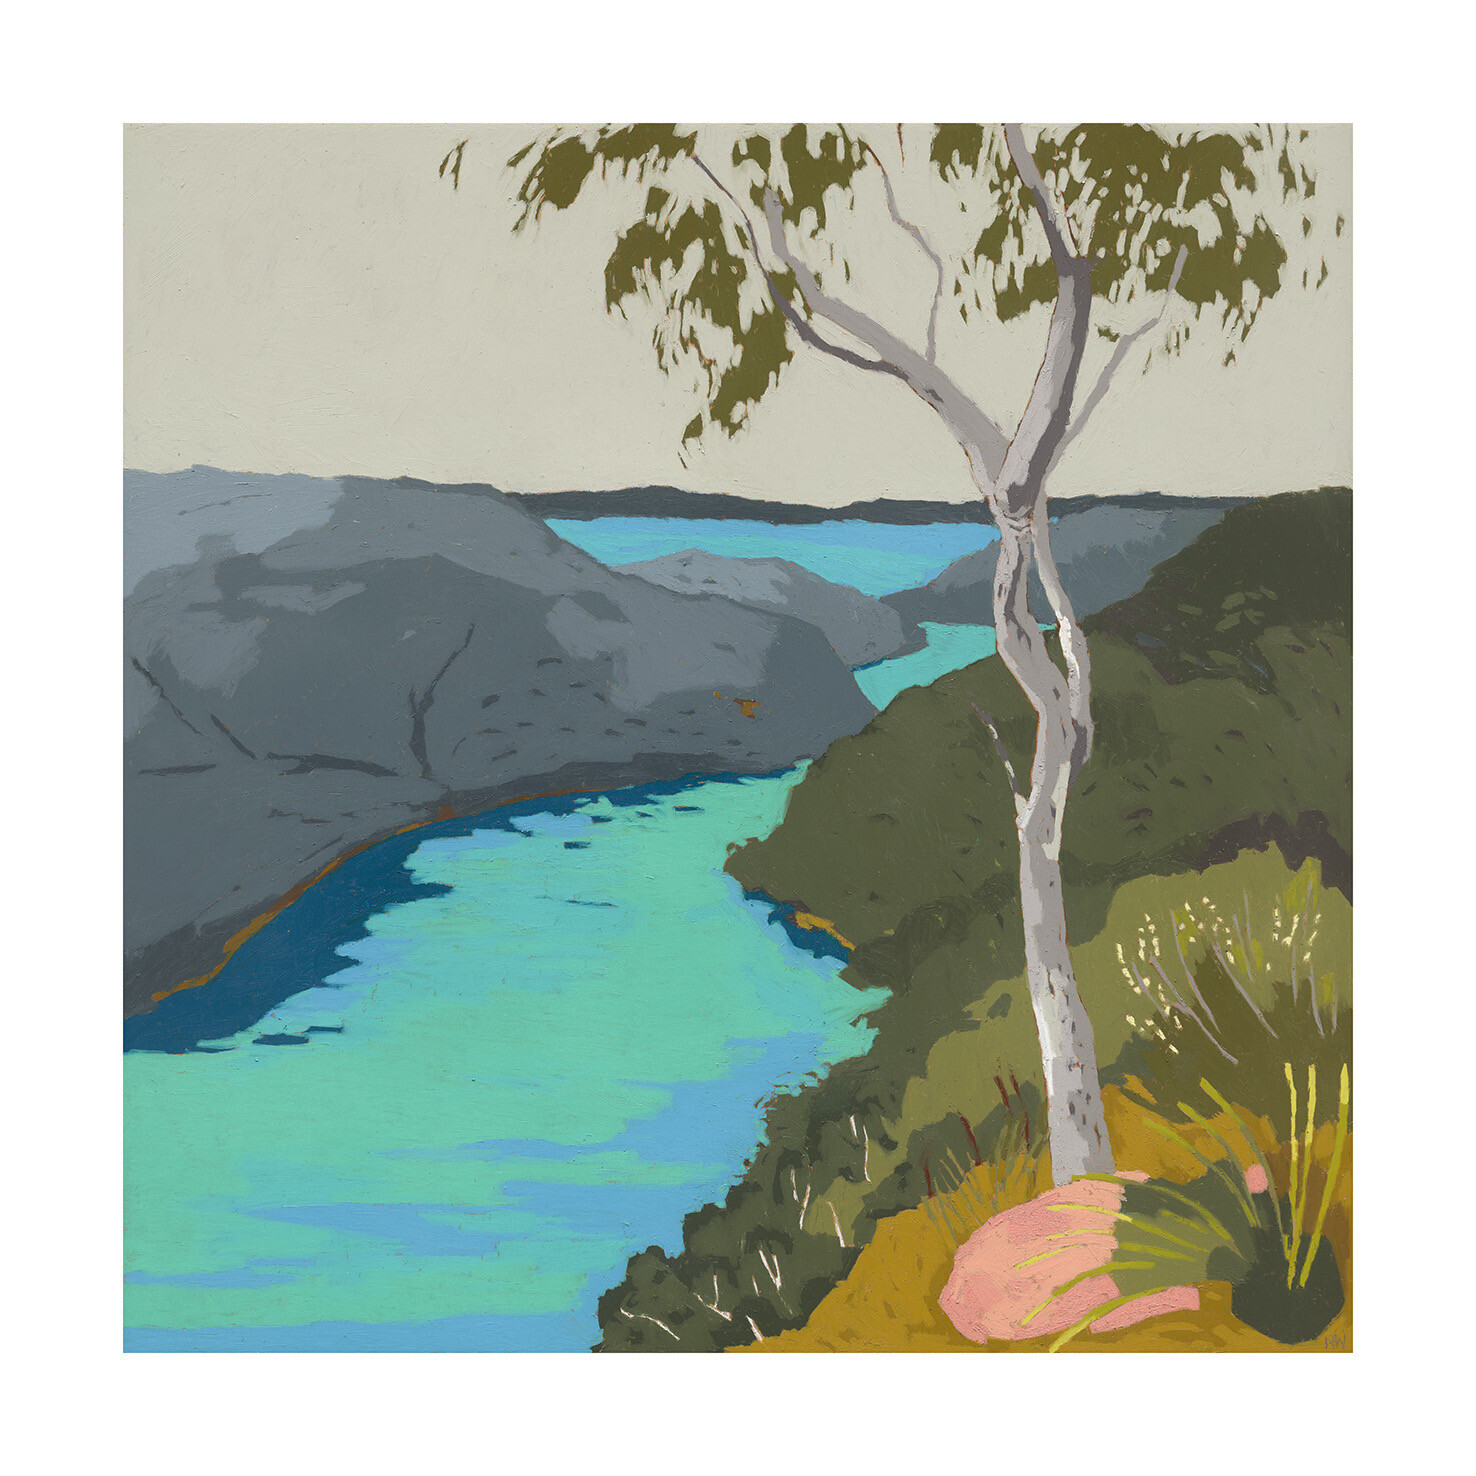 Limited Edition fine art print 'Cowan Creek'
70cm x 70cm 310gsm Photo Rag paper